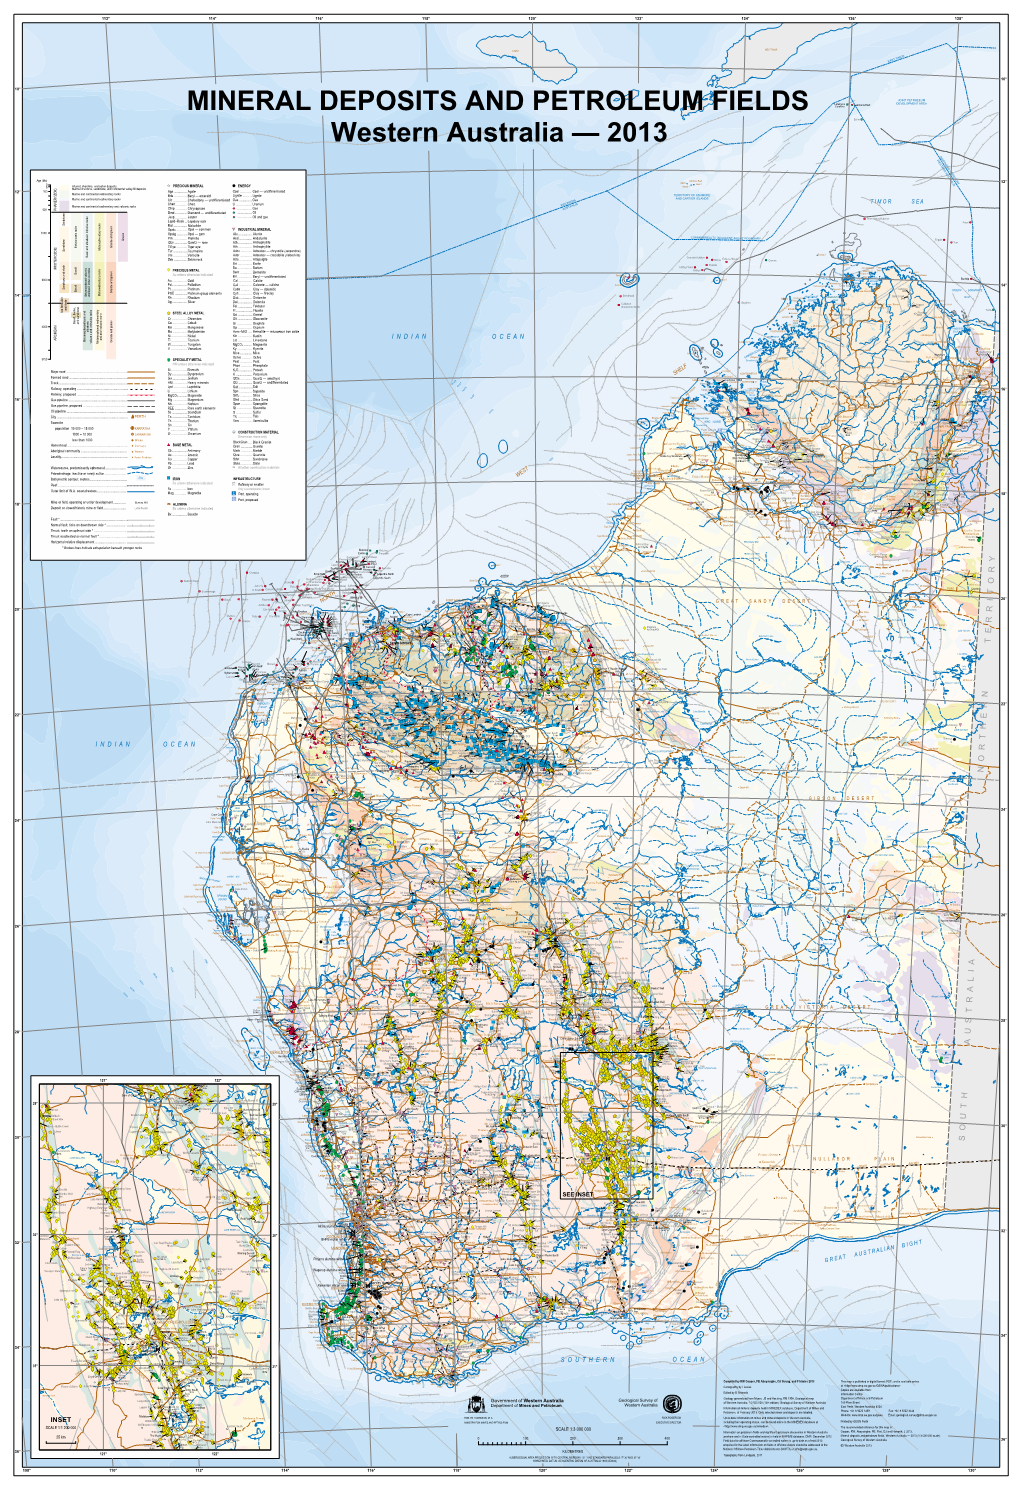 Western Australia Atlas of Mineral Deposits and Petroleum Fields 2013